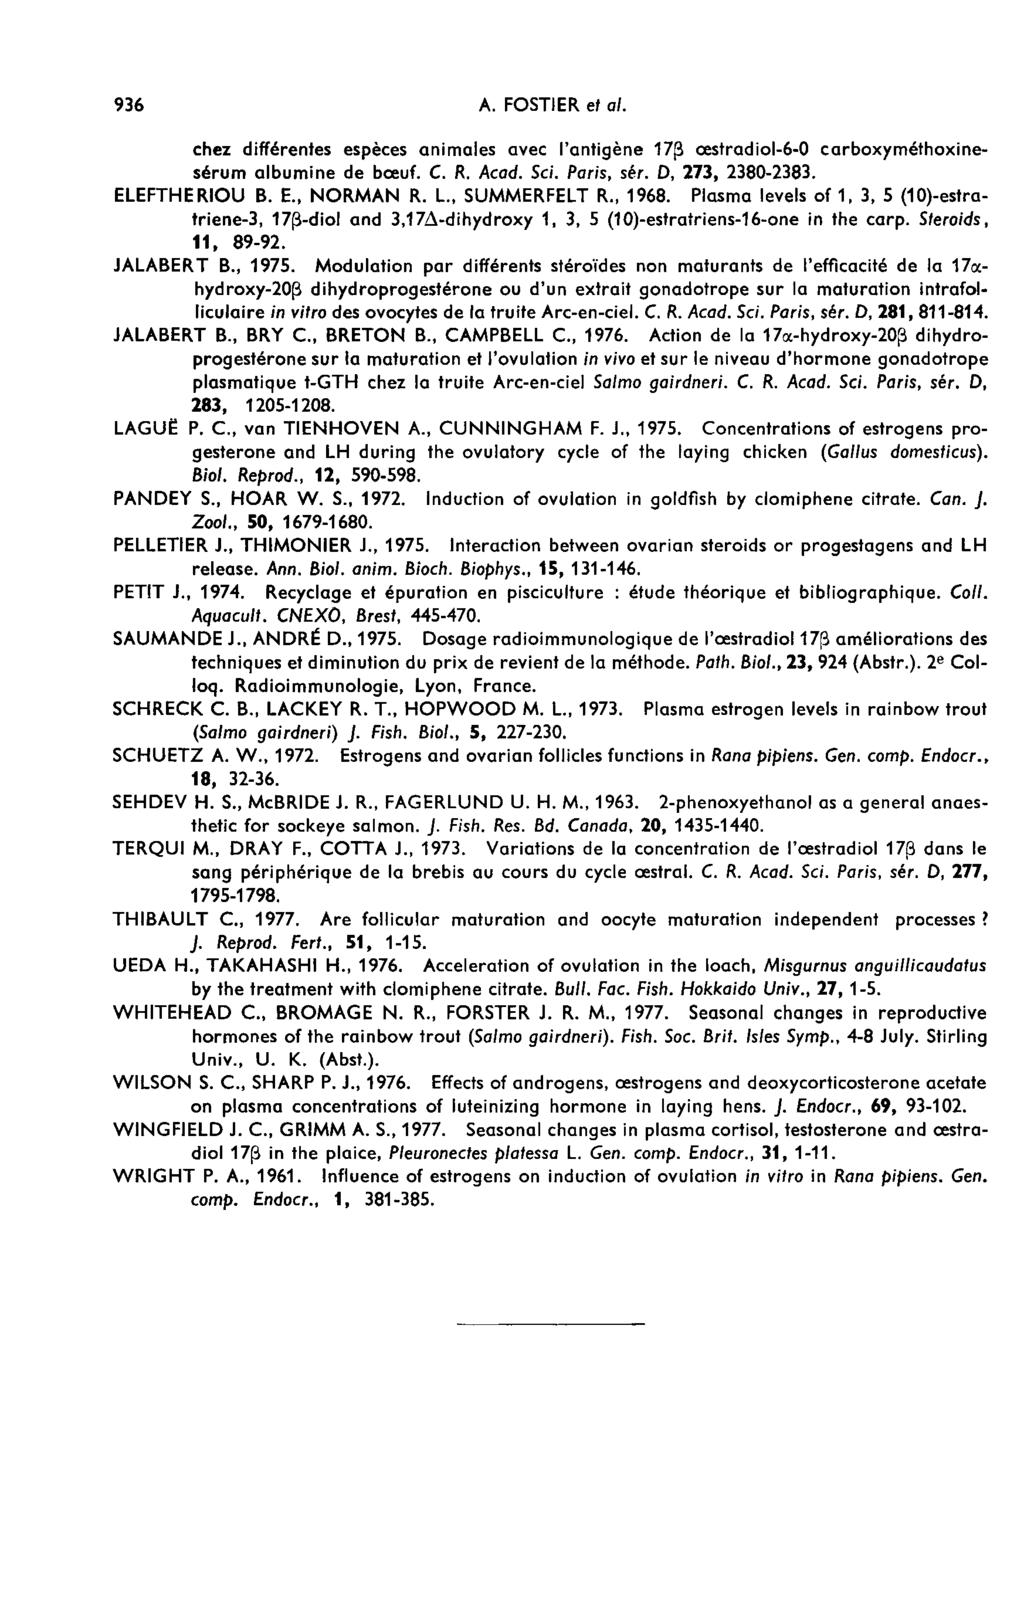 ELEFTHERIOU B. E., NORMAN R. L., SUMMERFELT R., 1968. chez diff 6rentes espèces animales avec I antig6ne 17P aestradiol-6-0 carboxym6thoxineserum albumine de boeuf. C. R. Acad. Sci. Paris, s6r.